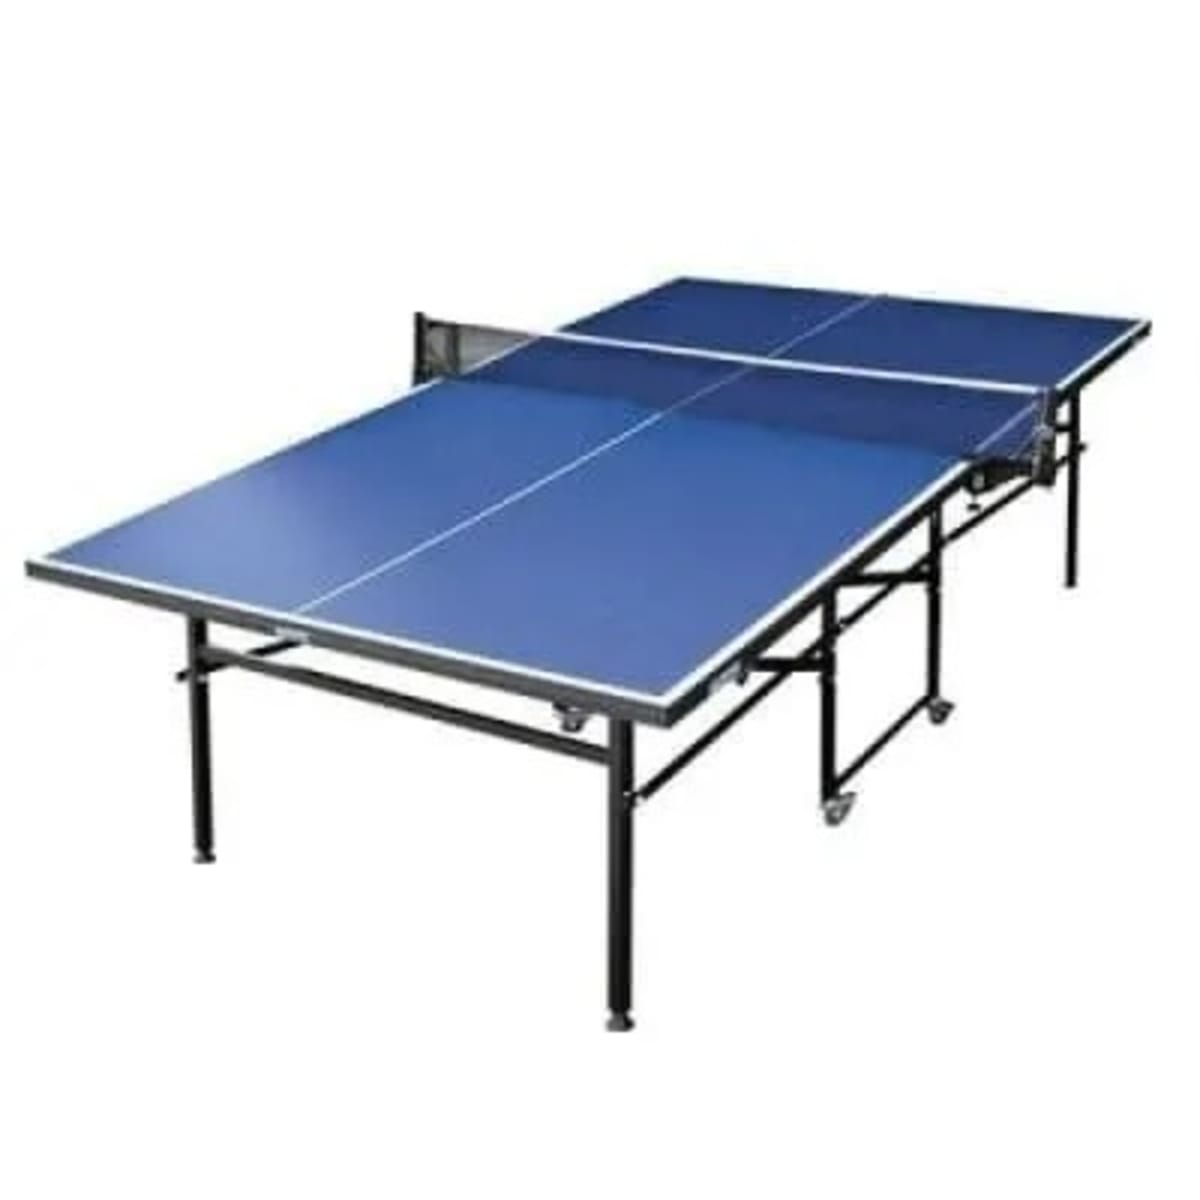 Outdoor Table Tennis Board Konga Online Shopping